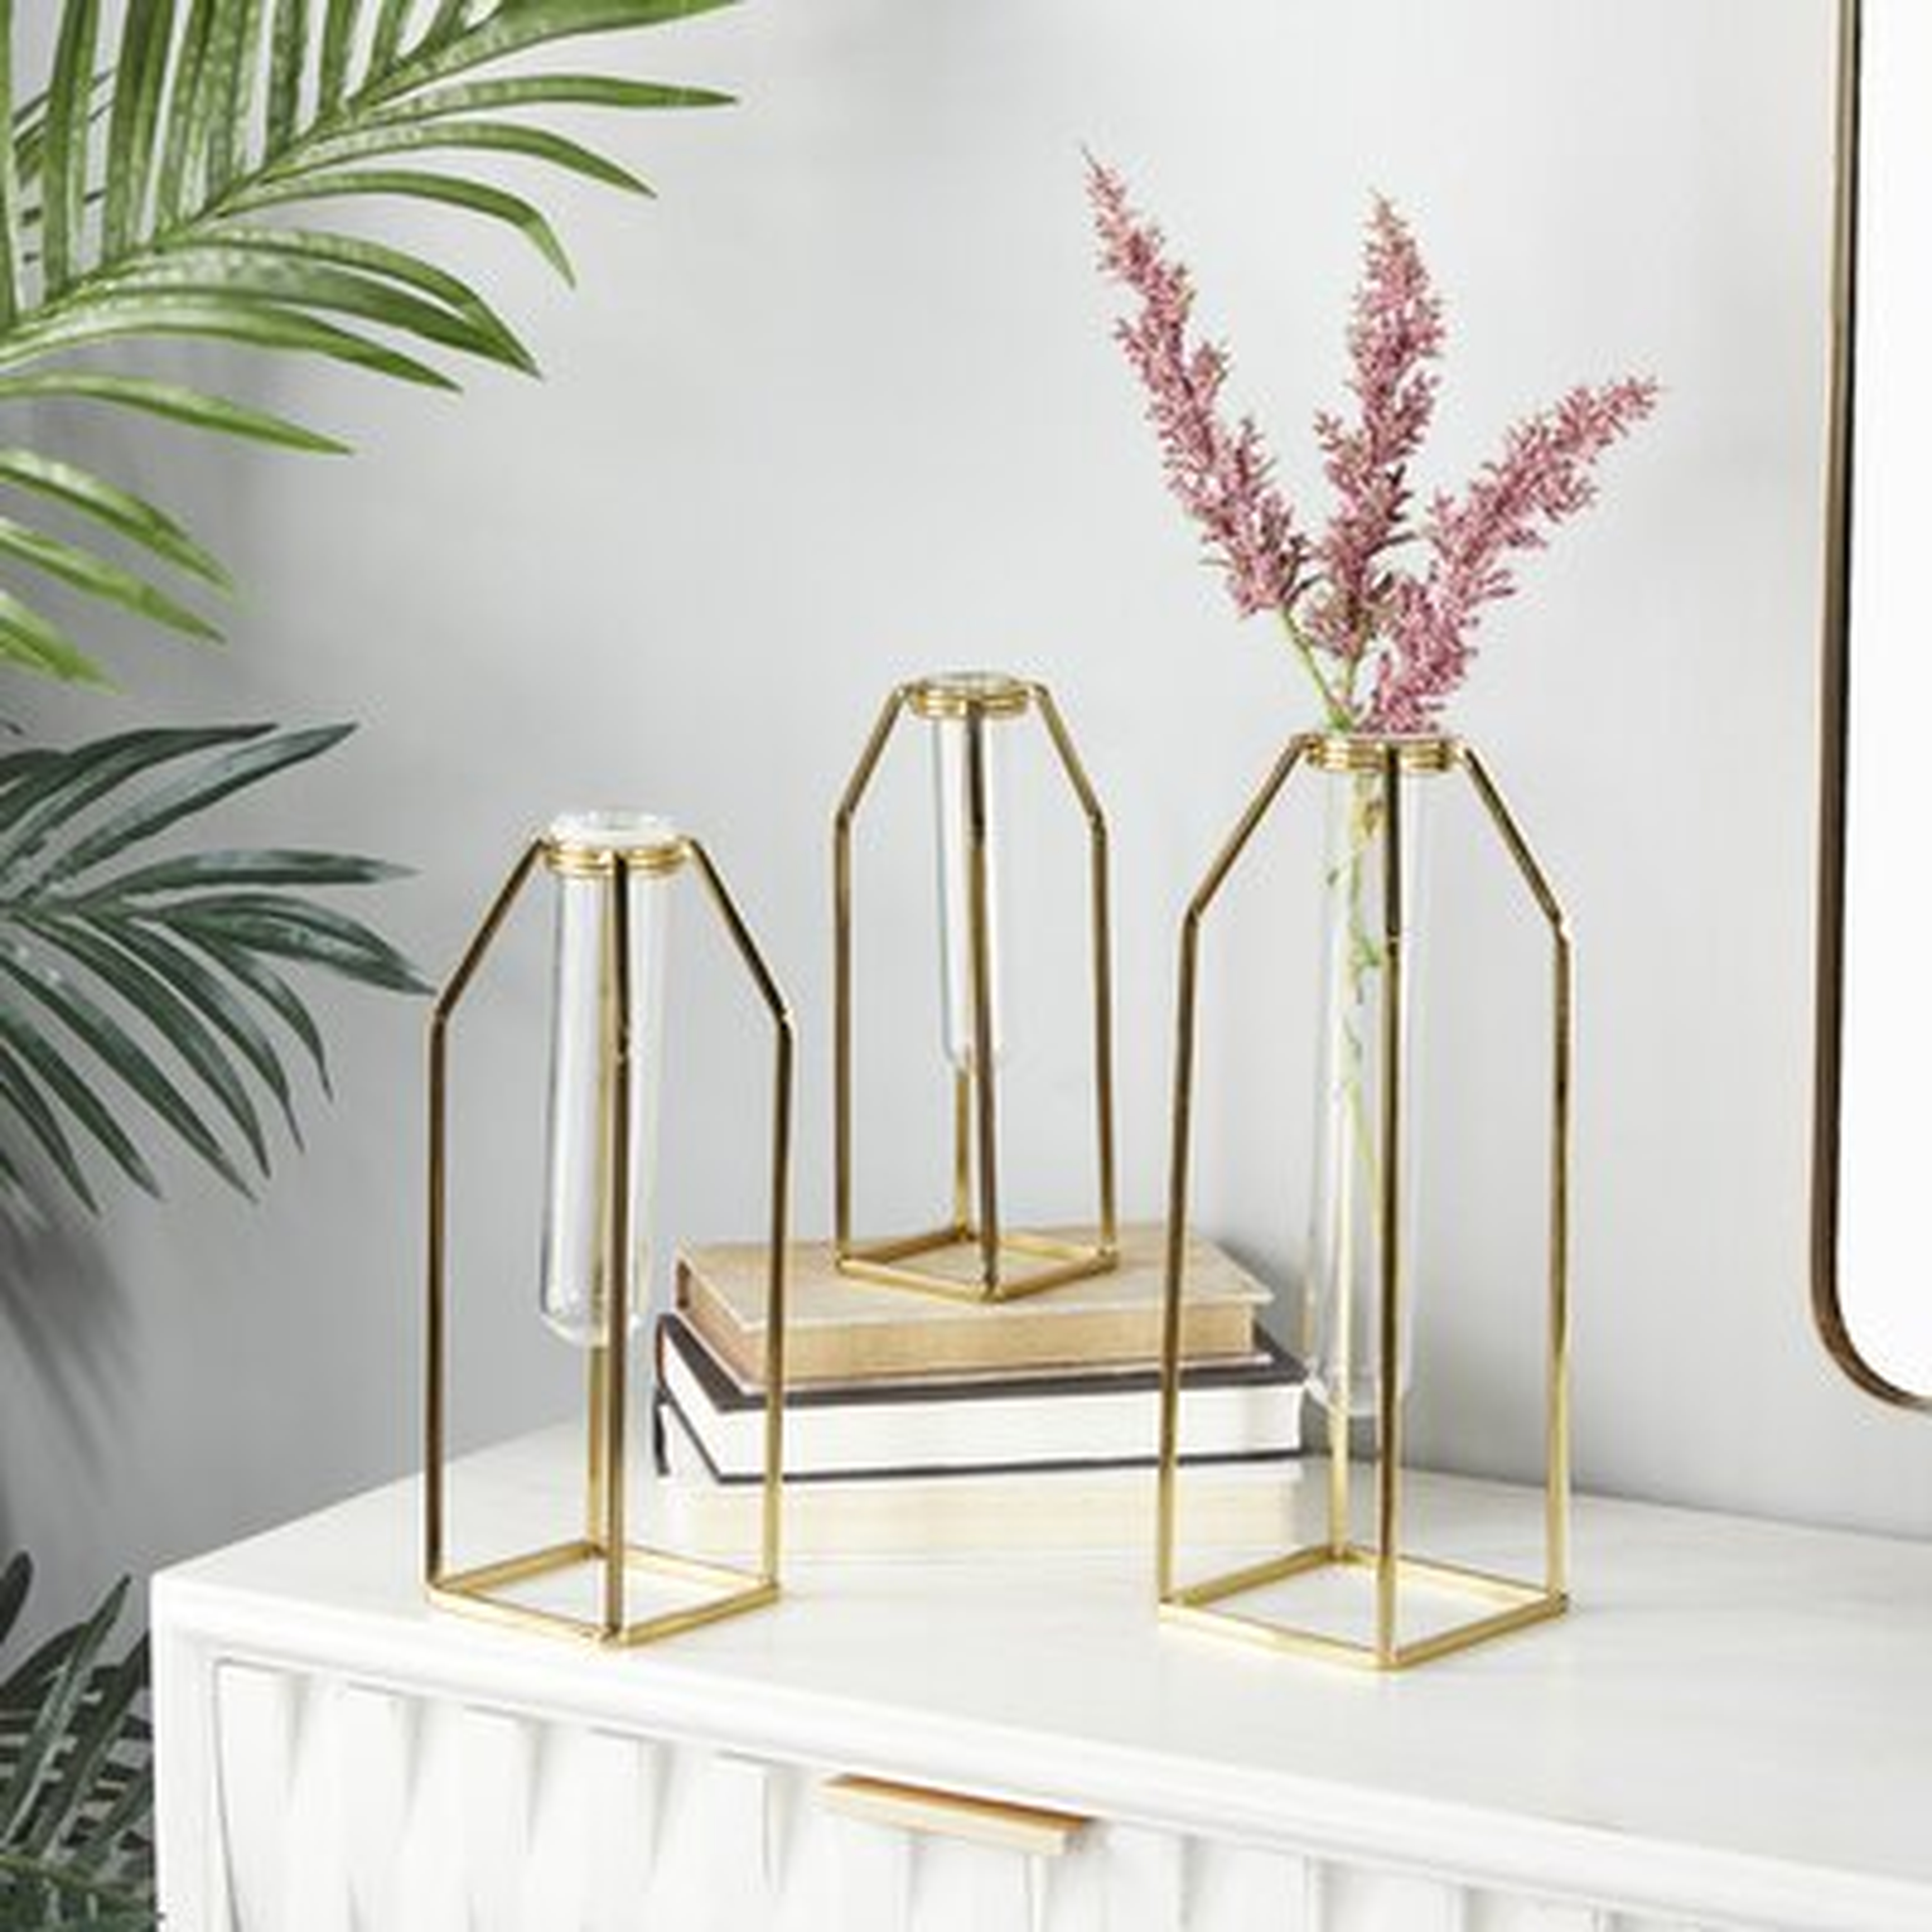 3 Piece Gold Stainless Steel Table Vase Set - Wayfair